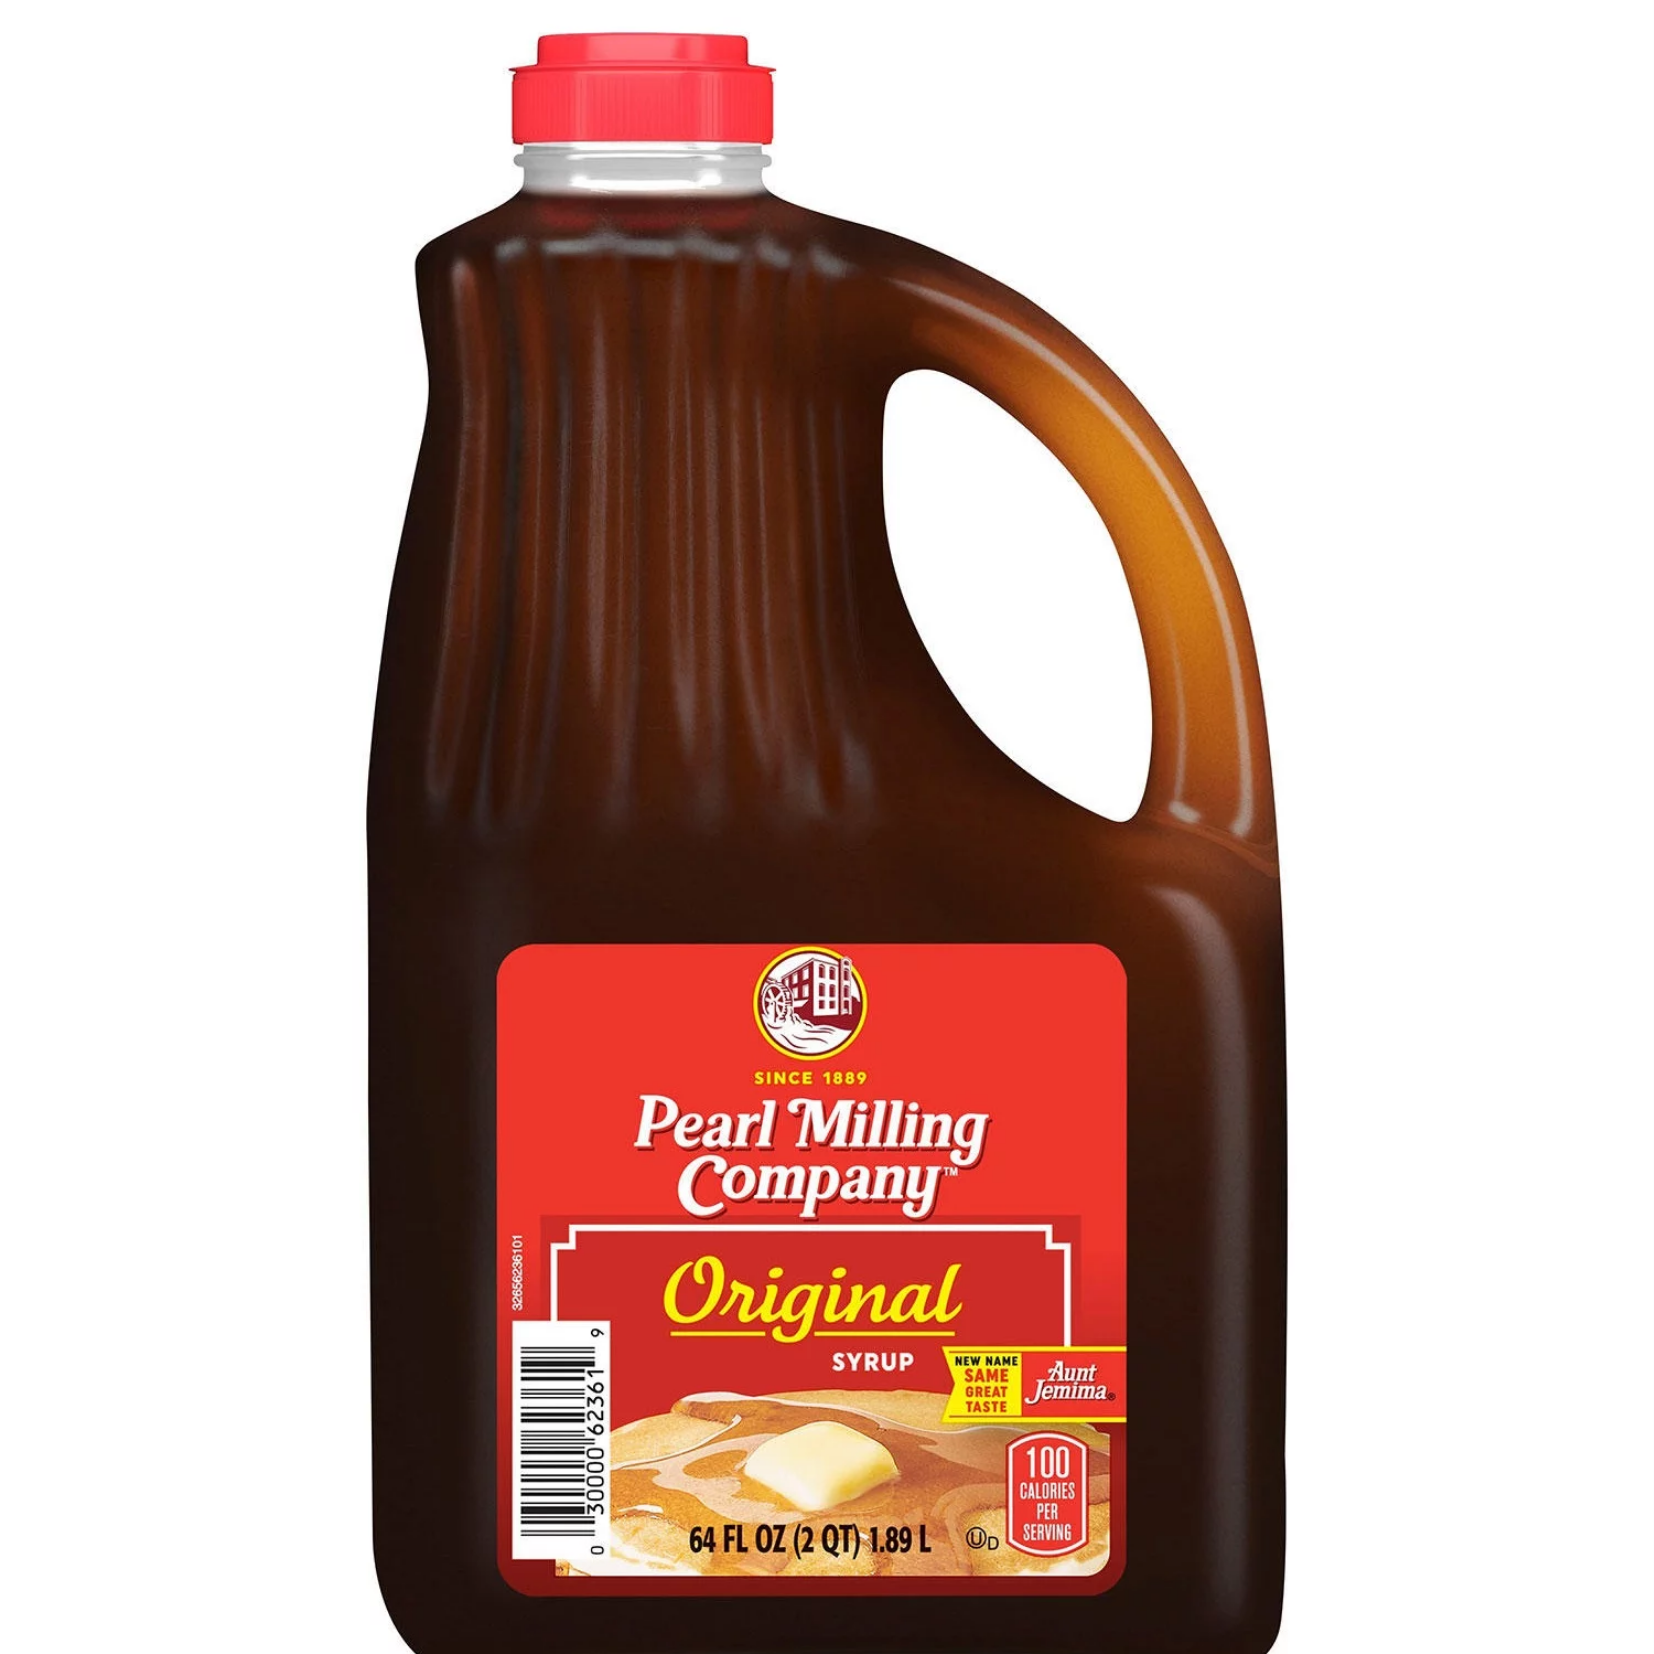 Pearl Milling Company Original Syrup 3.78L